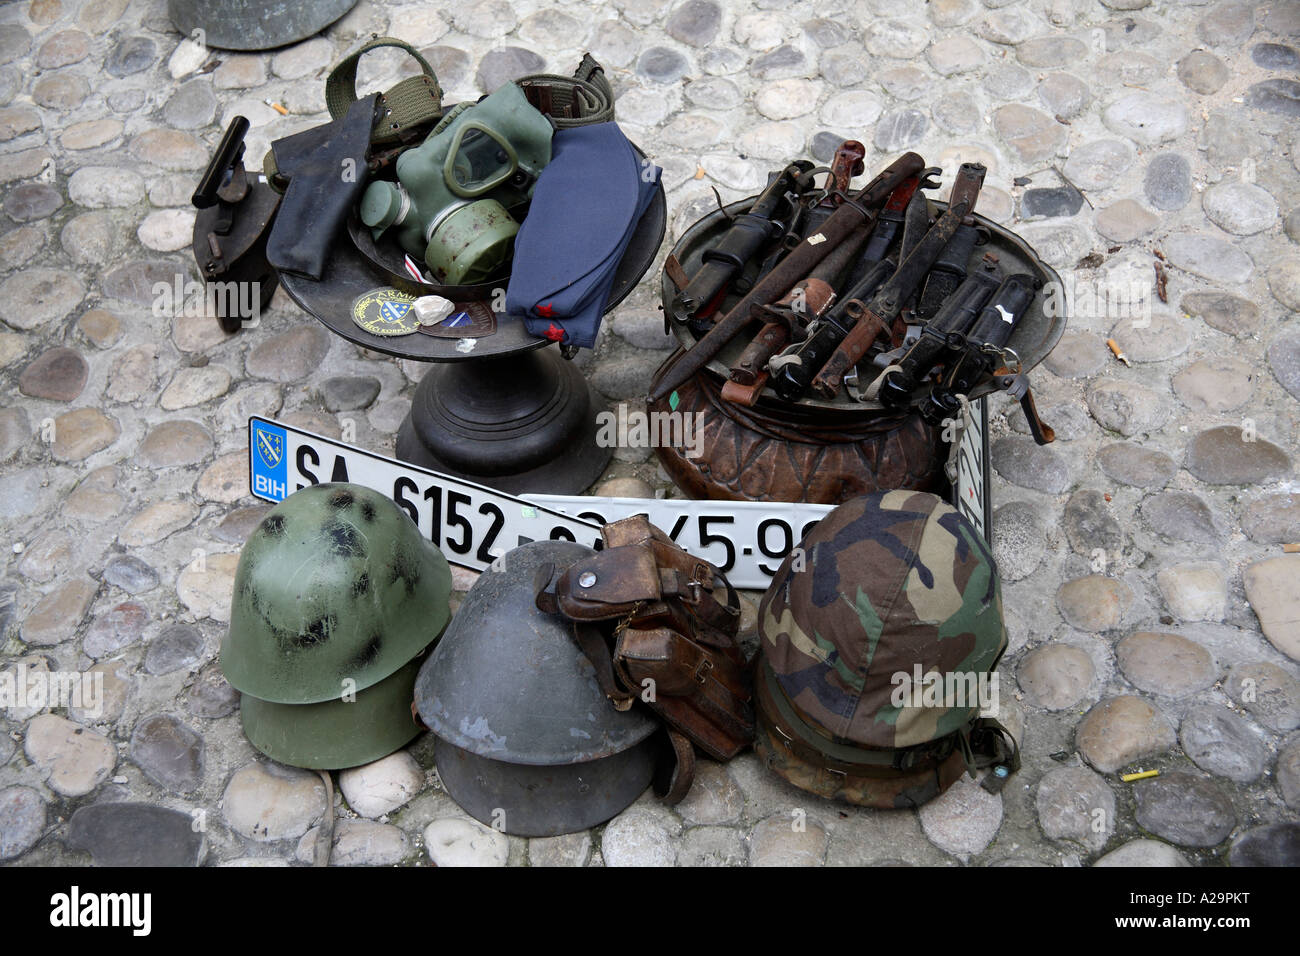 Militaria for sale as souvenirs. Mostar, Bosnia and Hertzegovina, Europe Stock Photo